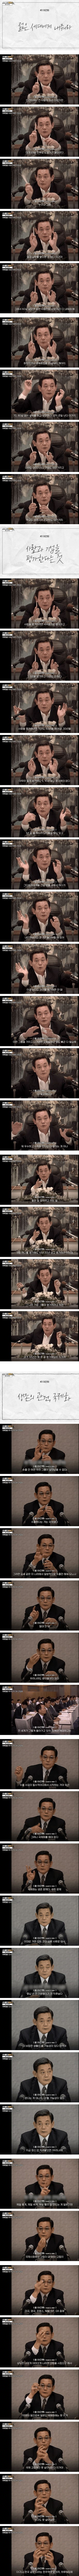 Chairman Lee Kunhee's quote.